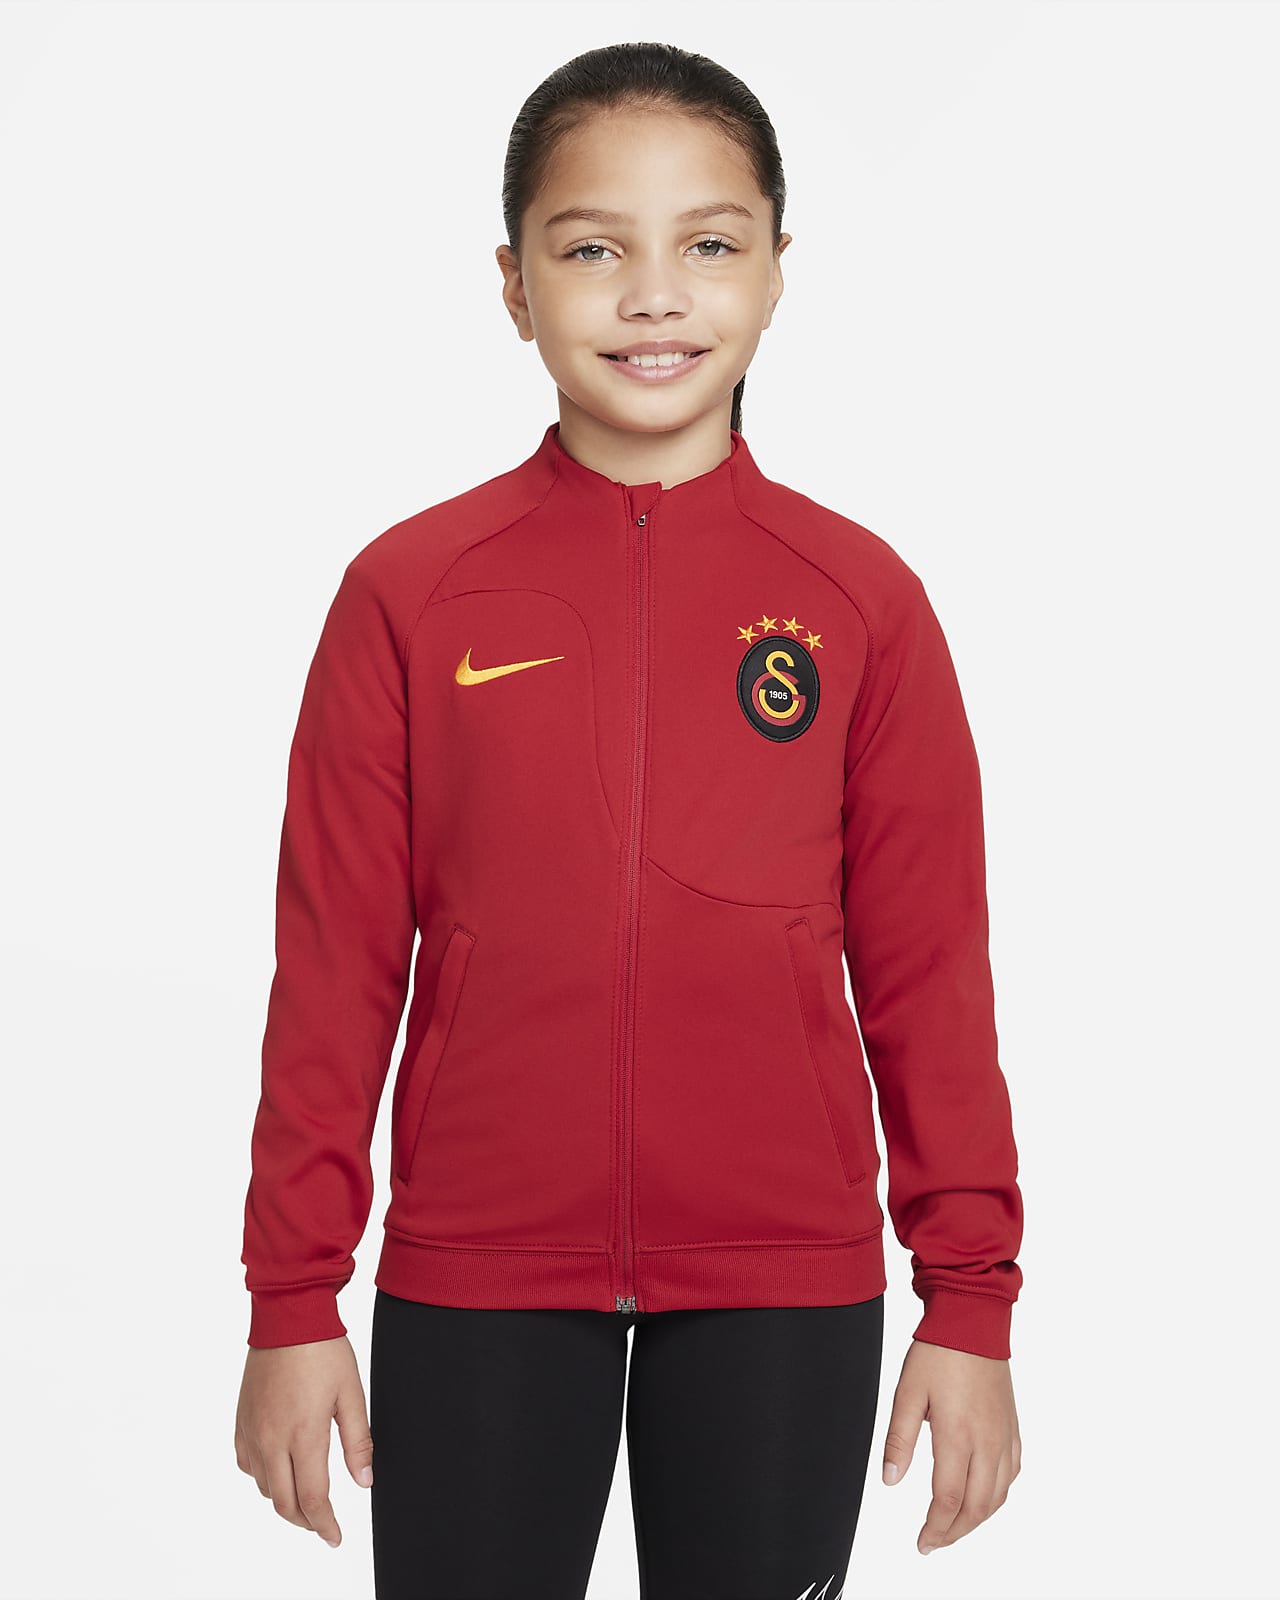 Gedragen Verzoekschrift Noord Galatasaray Academy Pro Nike Genç Çocuk Futbol Ceketi. Nike TR